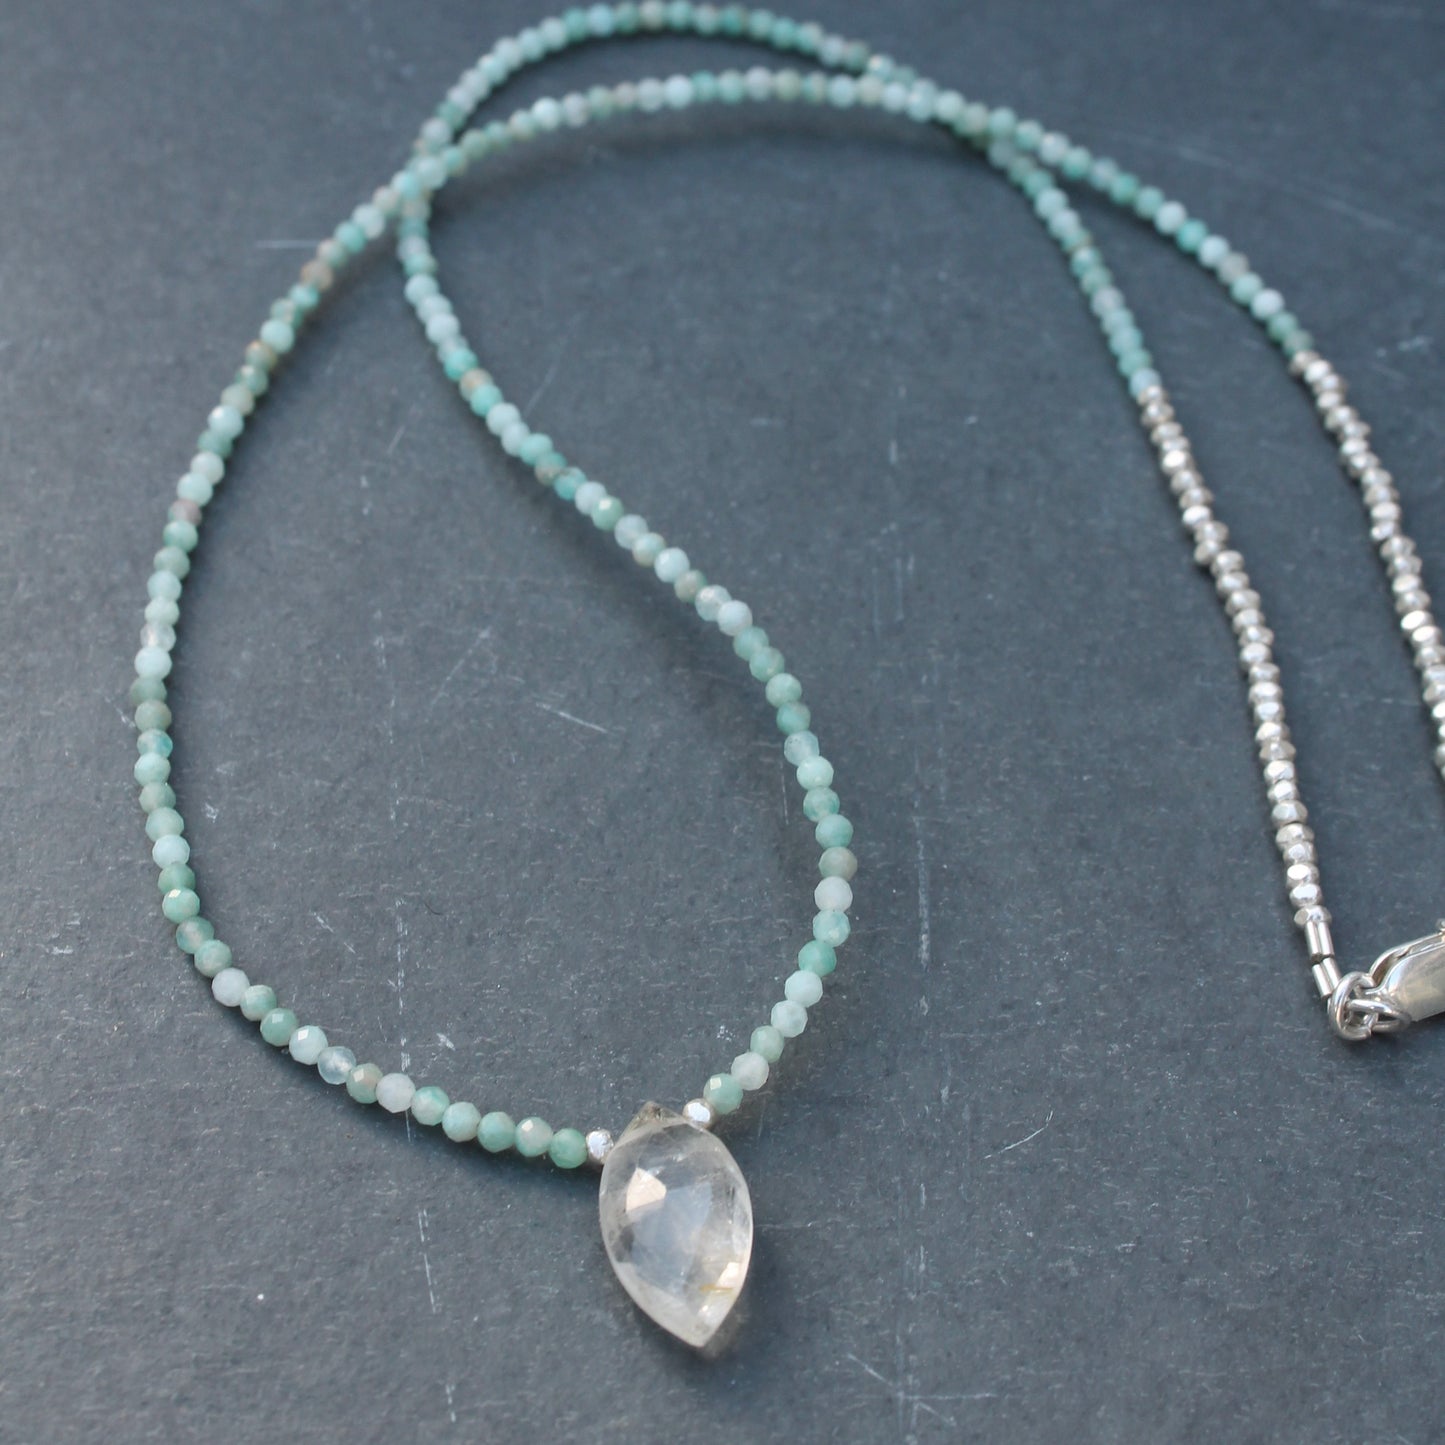 Marquise Rutile Quartz and Amazonite Gemstone Necklace